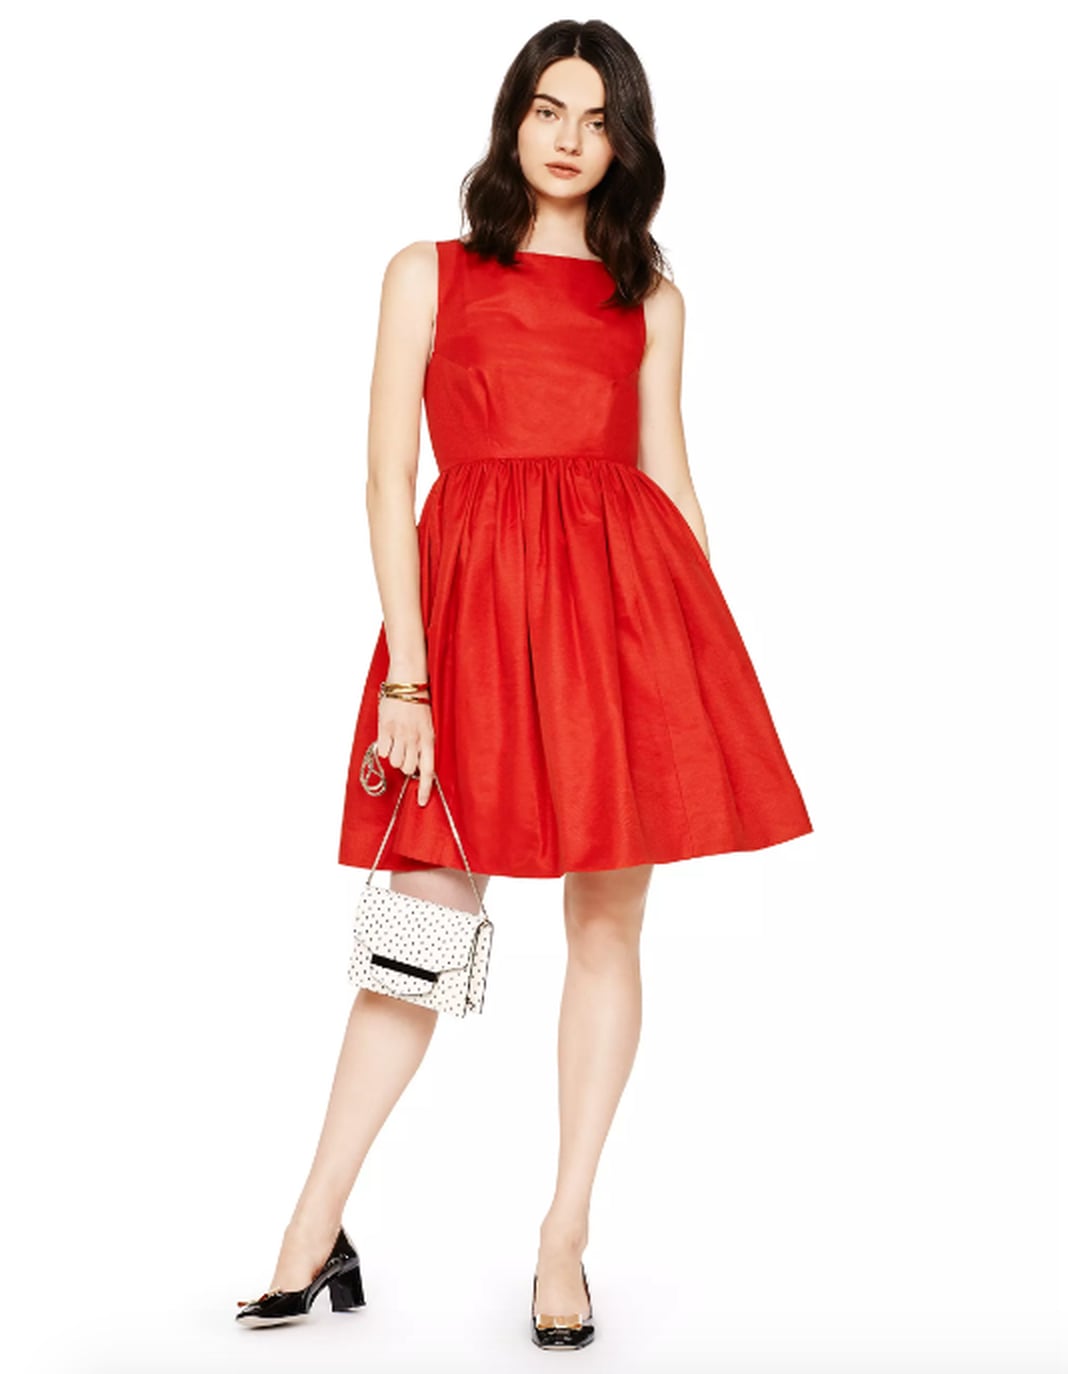 Me Before You Red Dress | POPSUGAR Fashion